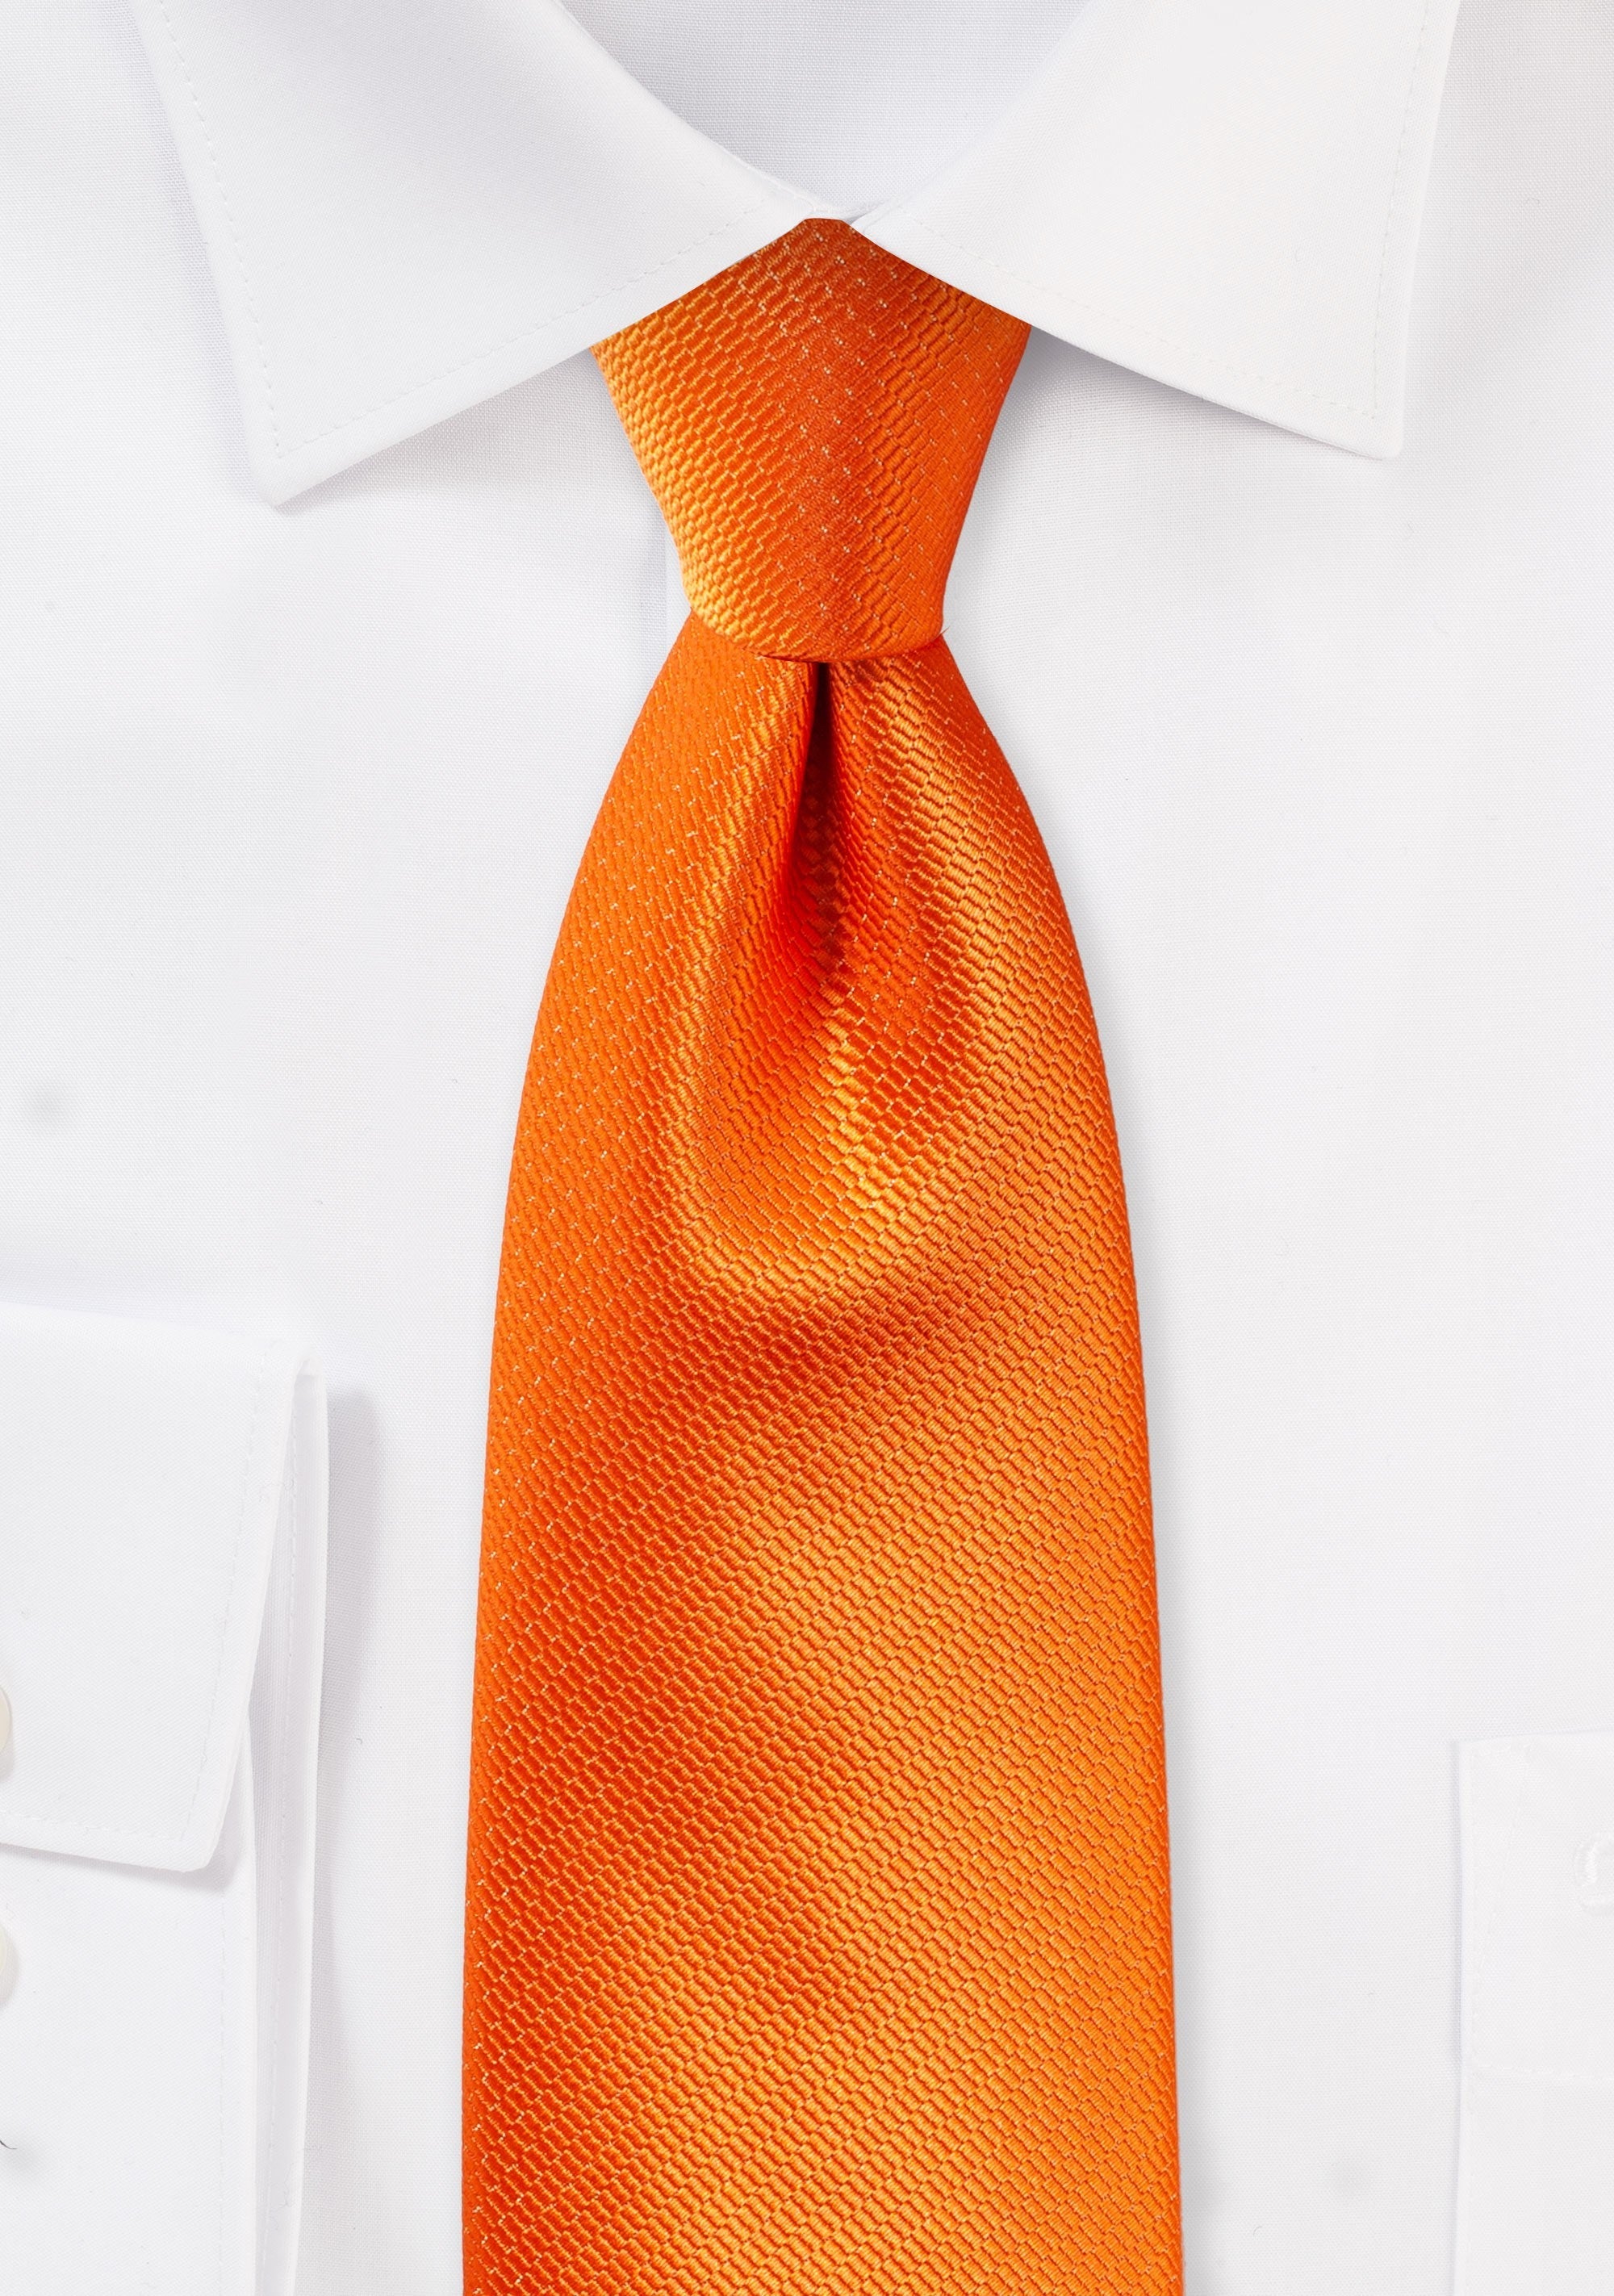 Tangerine Orange Small Texture Necktie